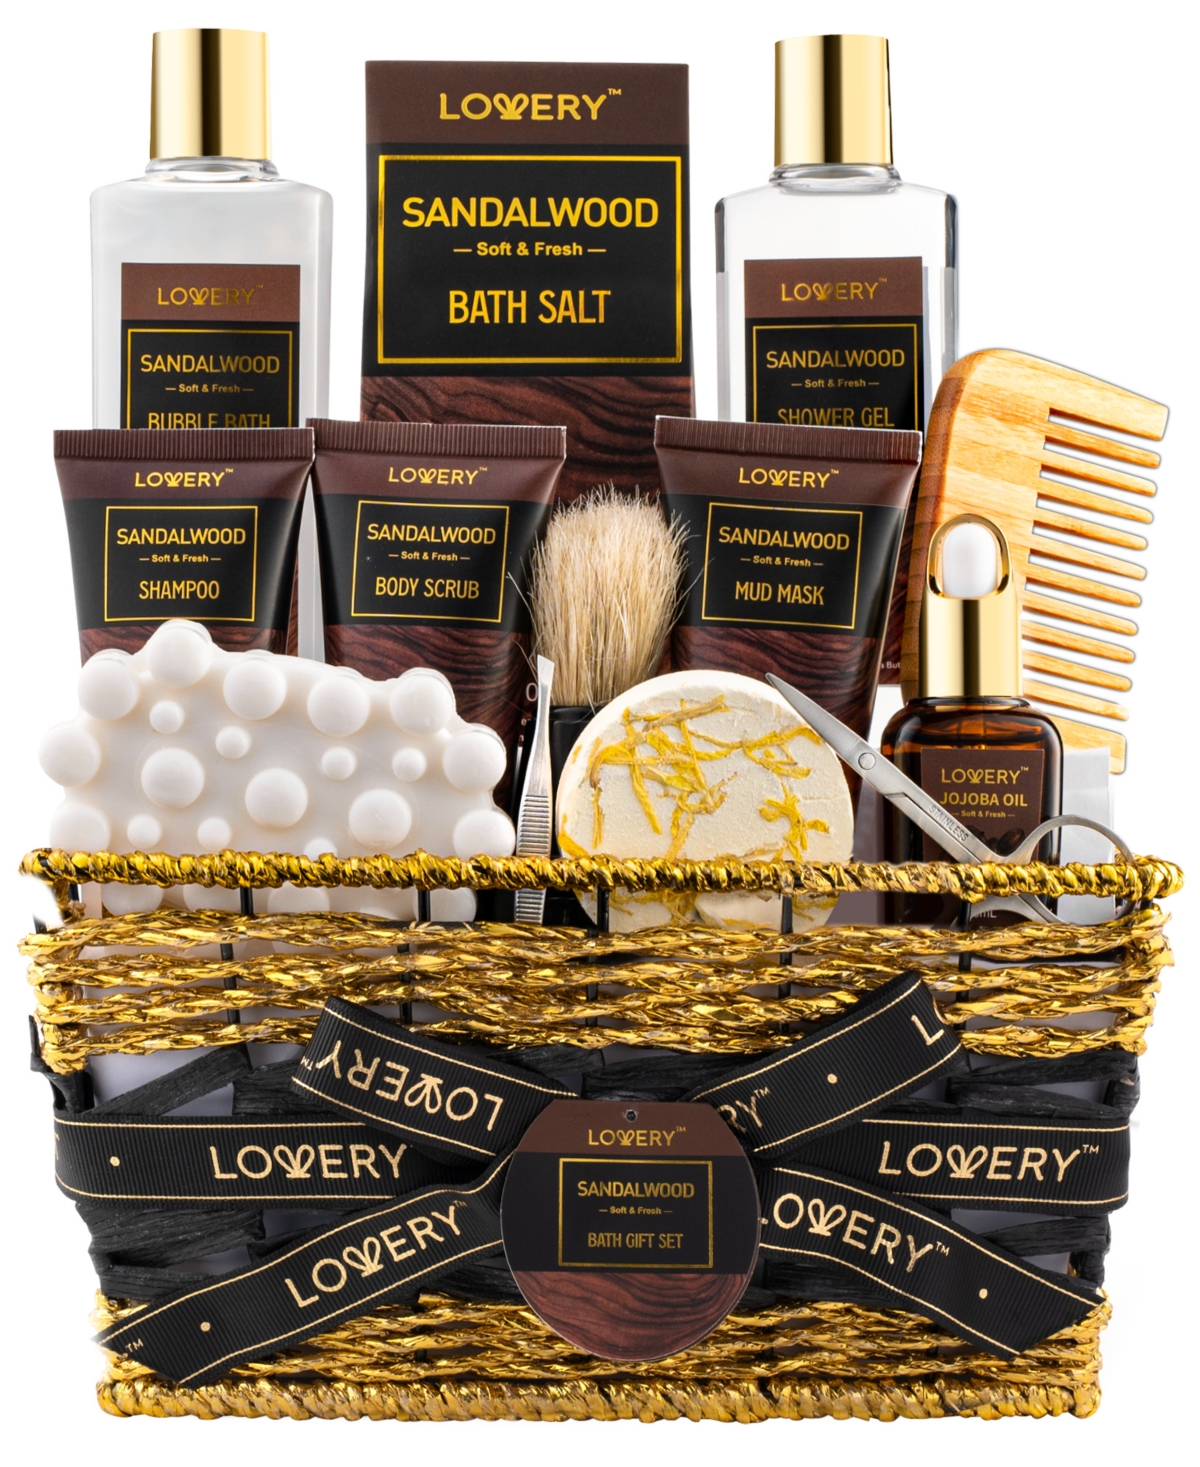 Lovery Body Care Gift Set, Sandalwood Bath Gift Set, Grooming Self Care Kit, 14 Piece